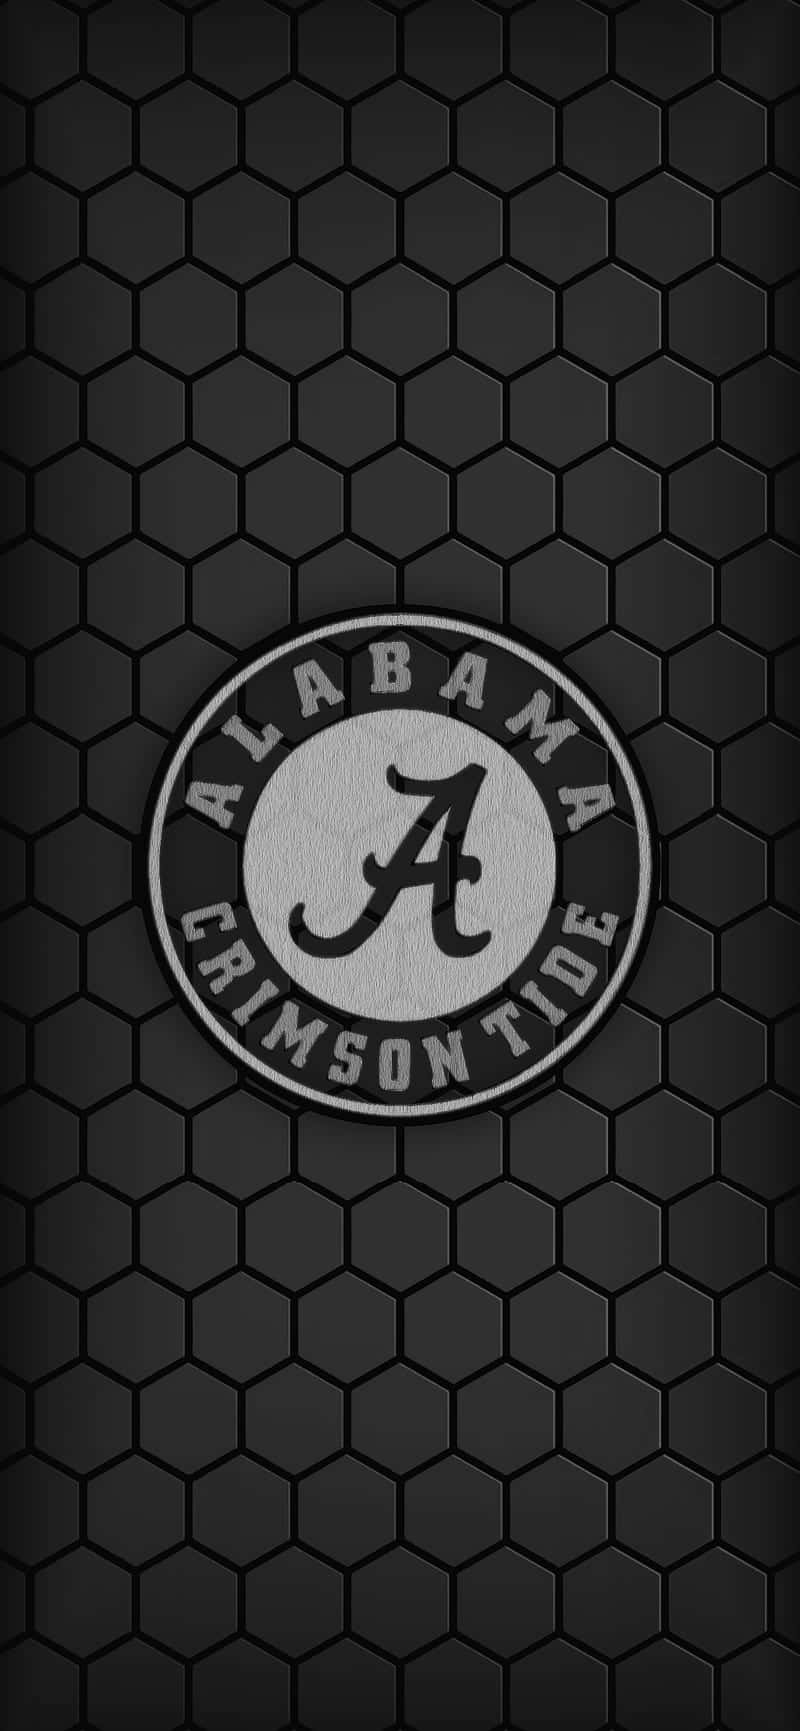 Roll Tide! Alabama Football iPhone Wallpaper